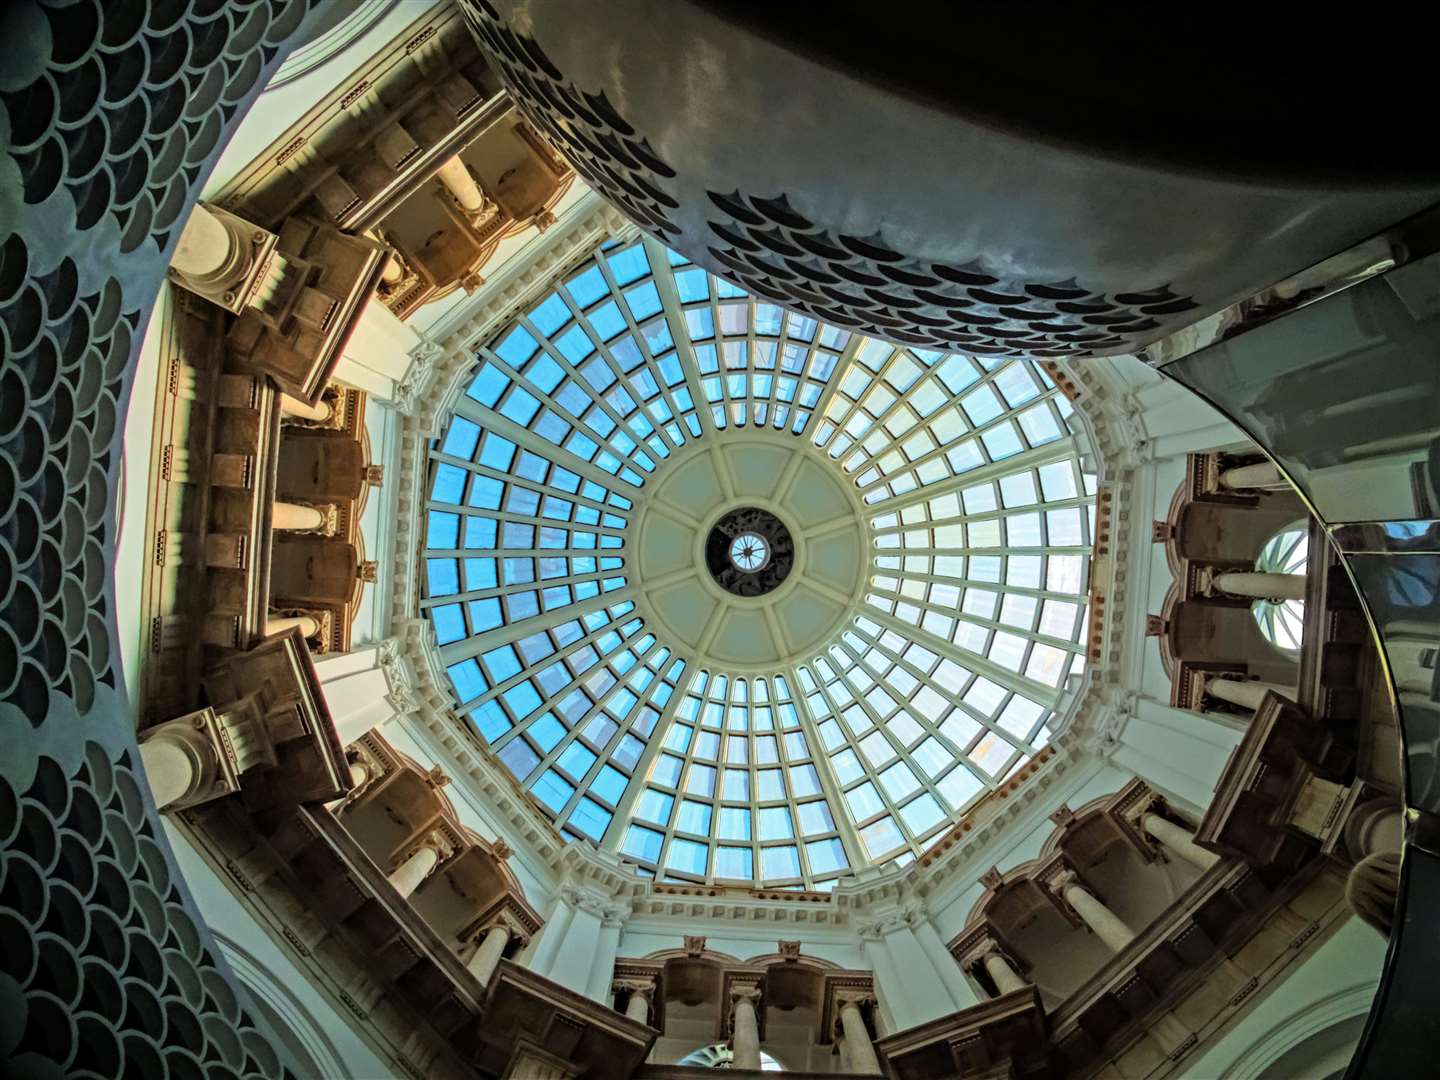 Get a look inside Tate Britain Picture: Martin Cooper